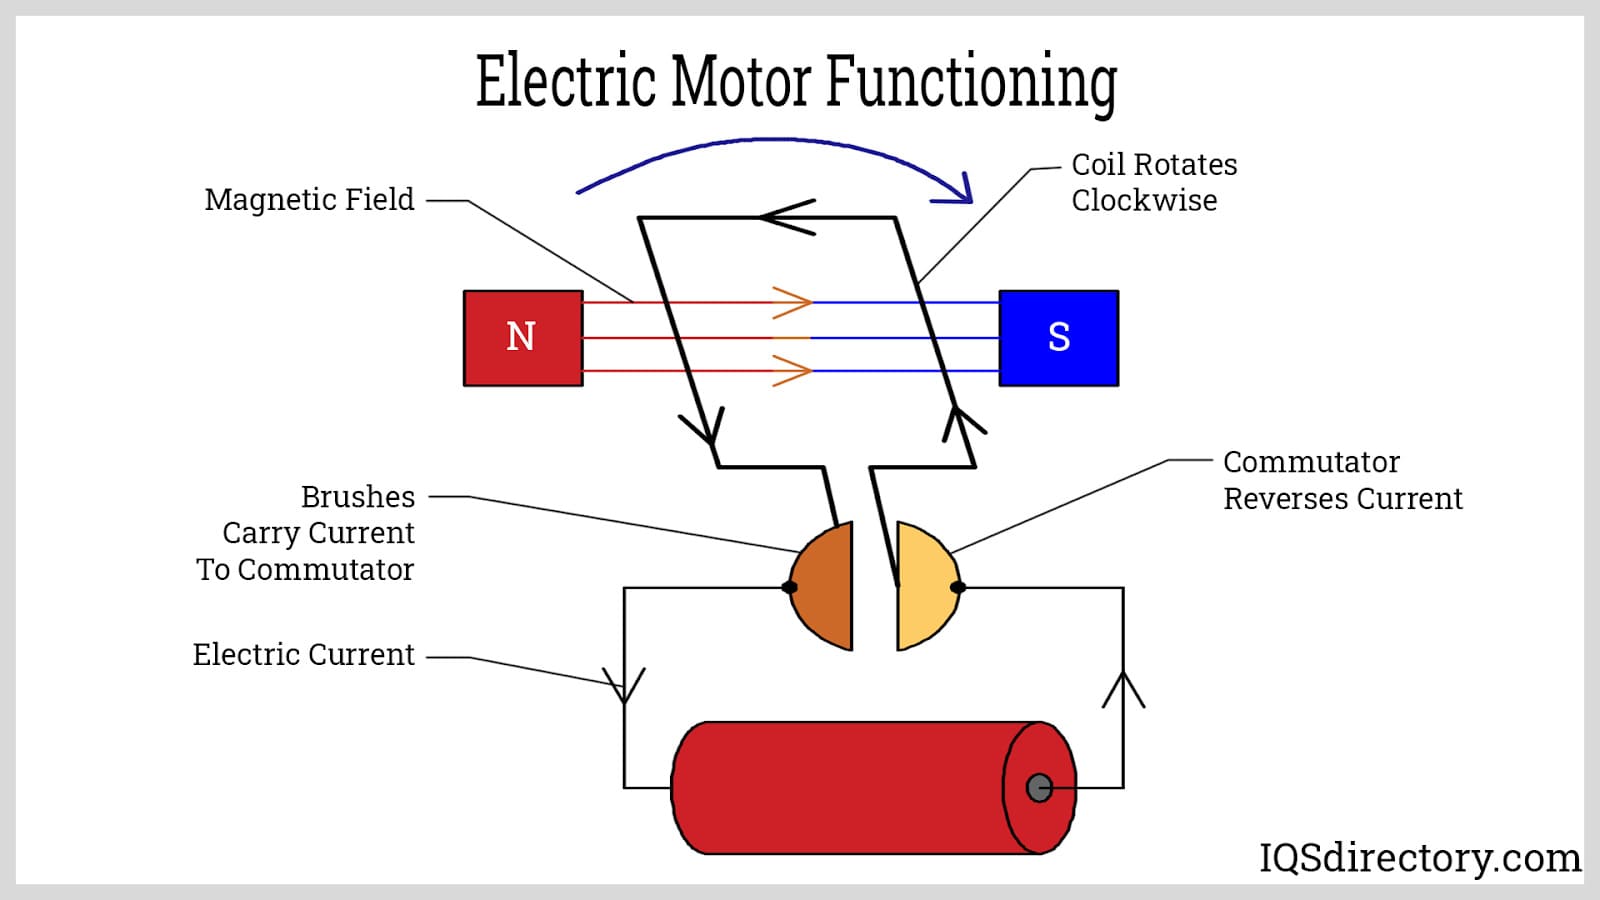 Electric Motor Functioning